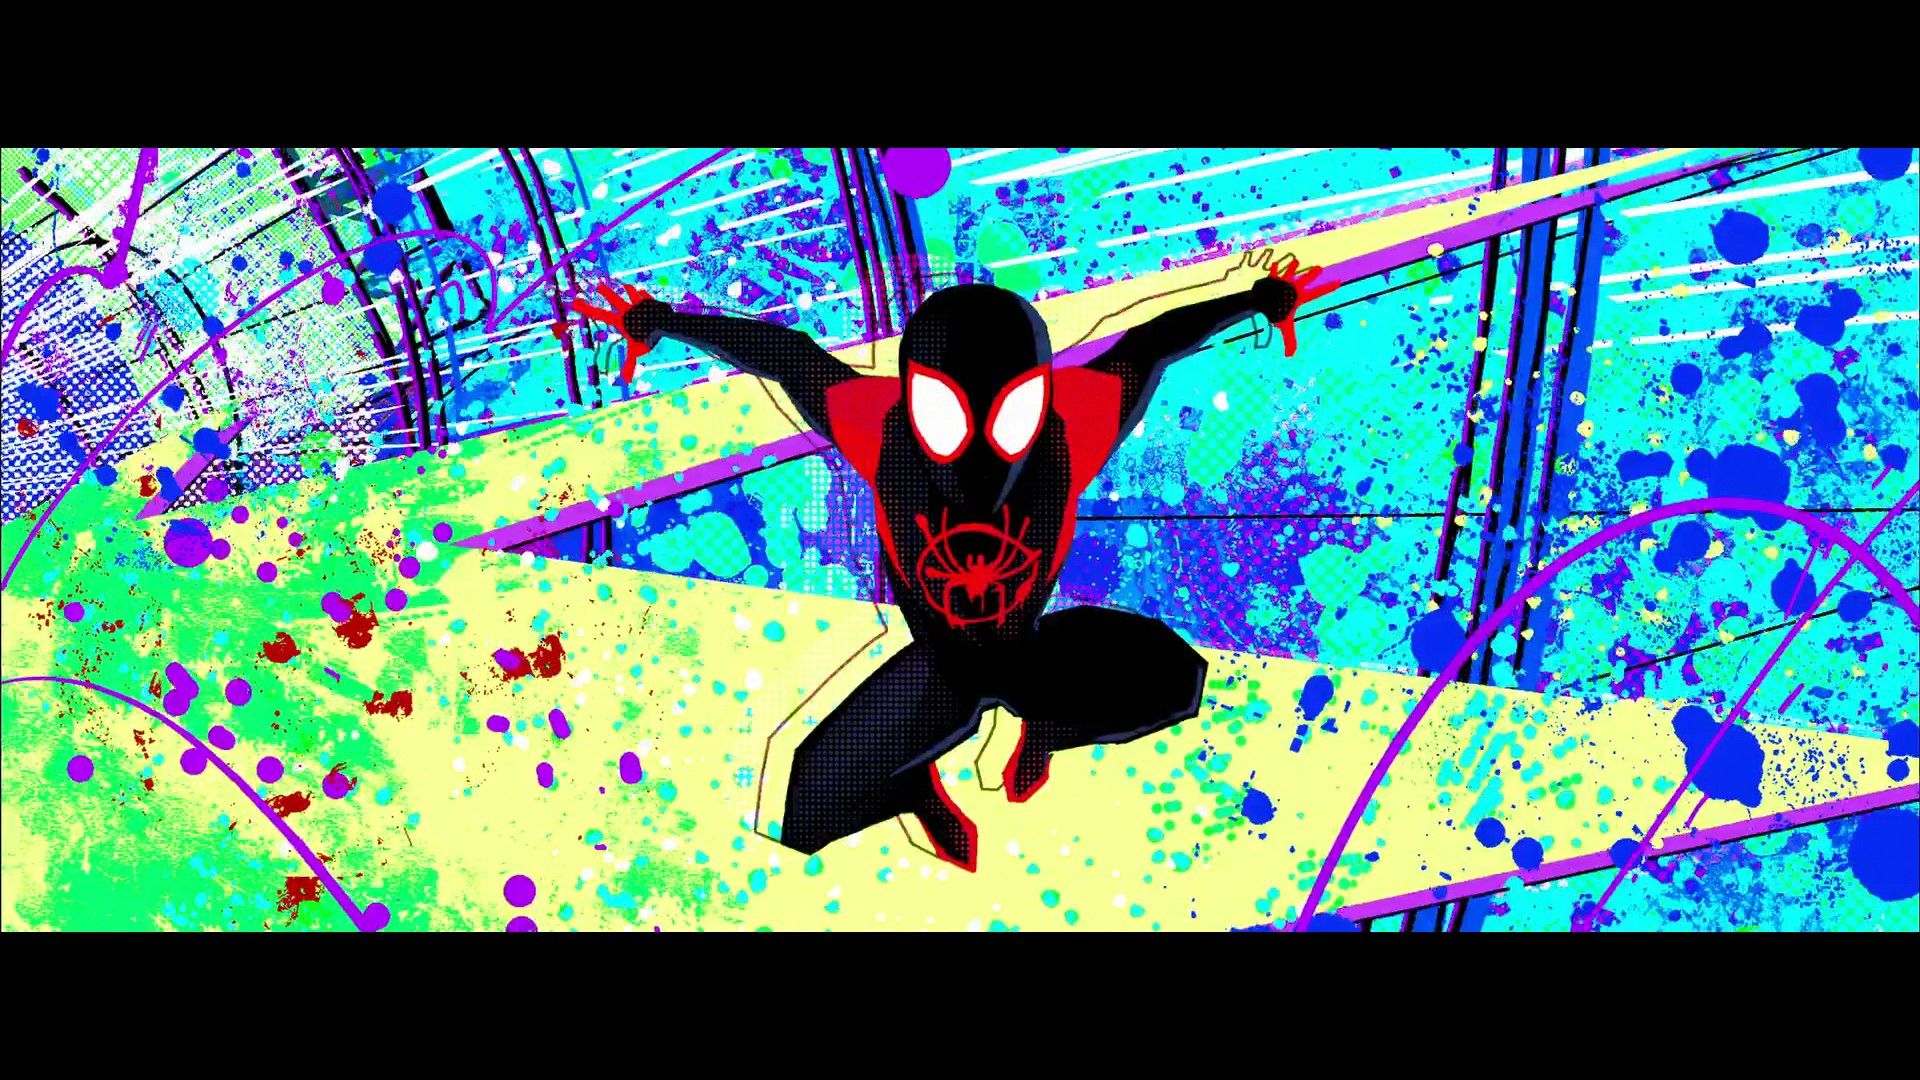 Spider Man Into The Spider Verse And How This Film Inspires. By Munkh Erdene Batzorig